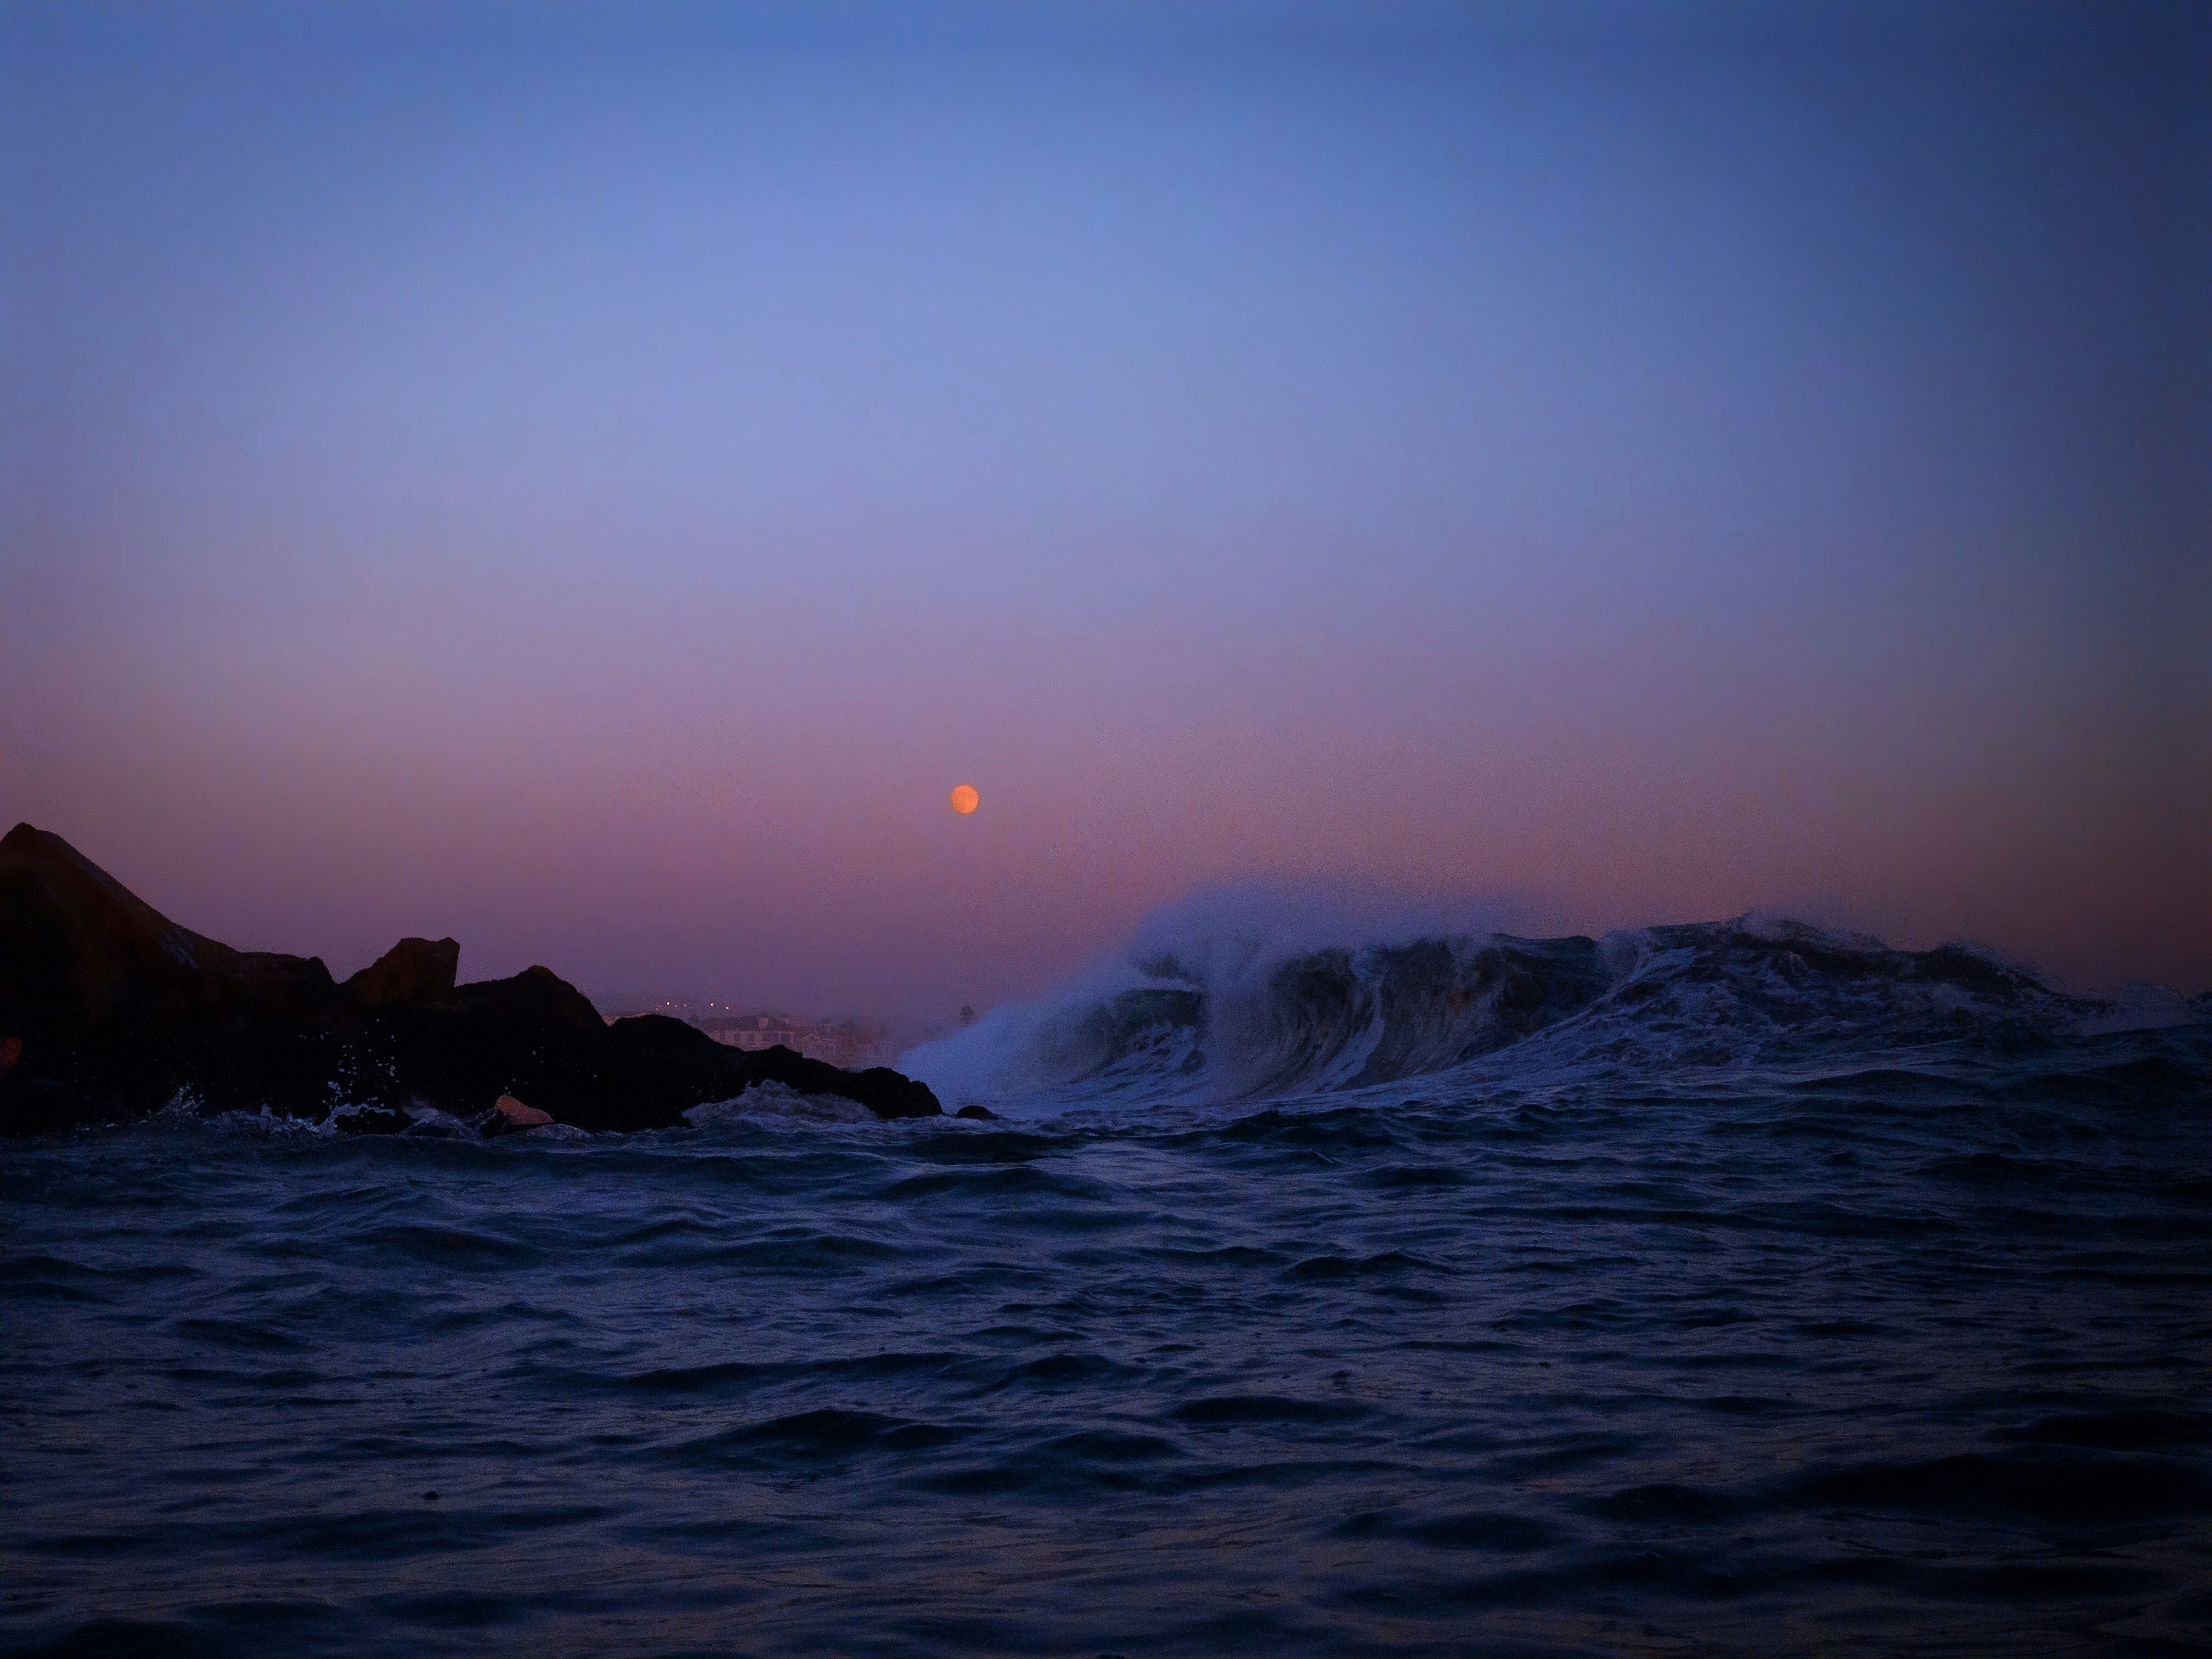 ocean waves crashing on rocky shore during sunset